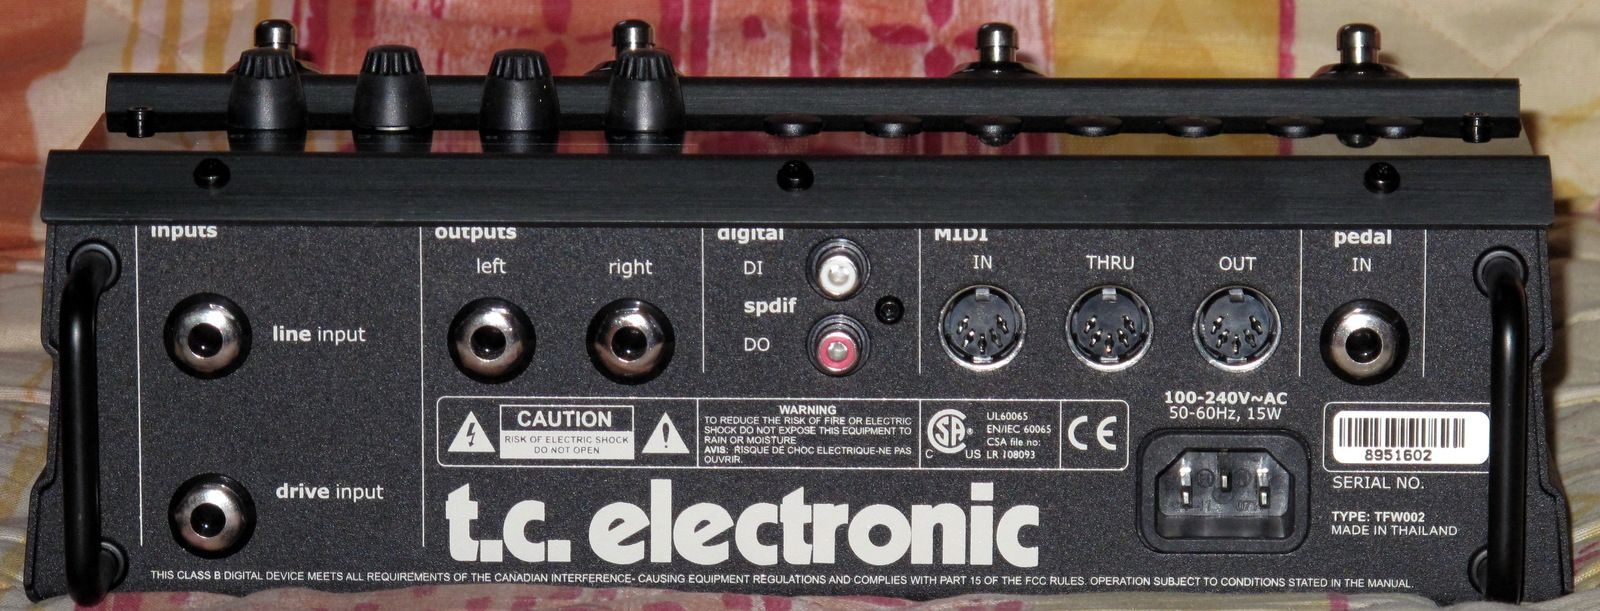 tc-electronic-nova-system-195315.jpg